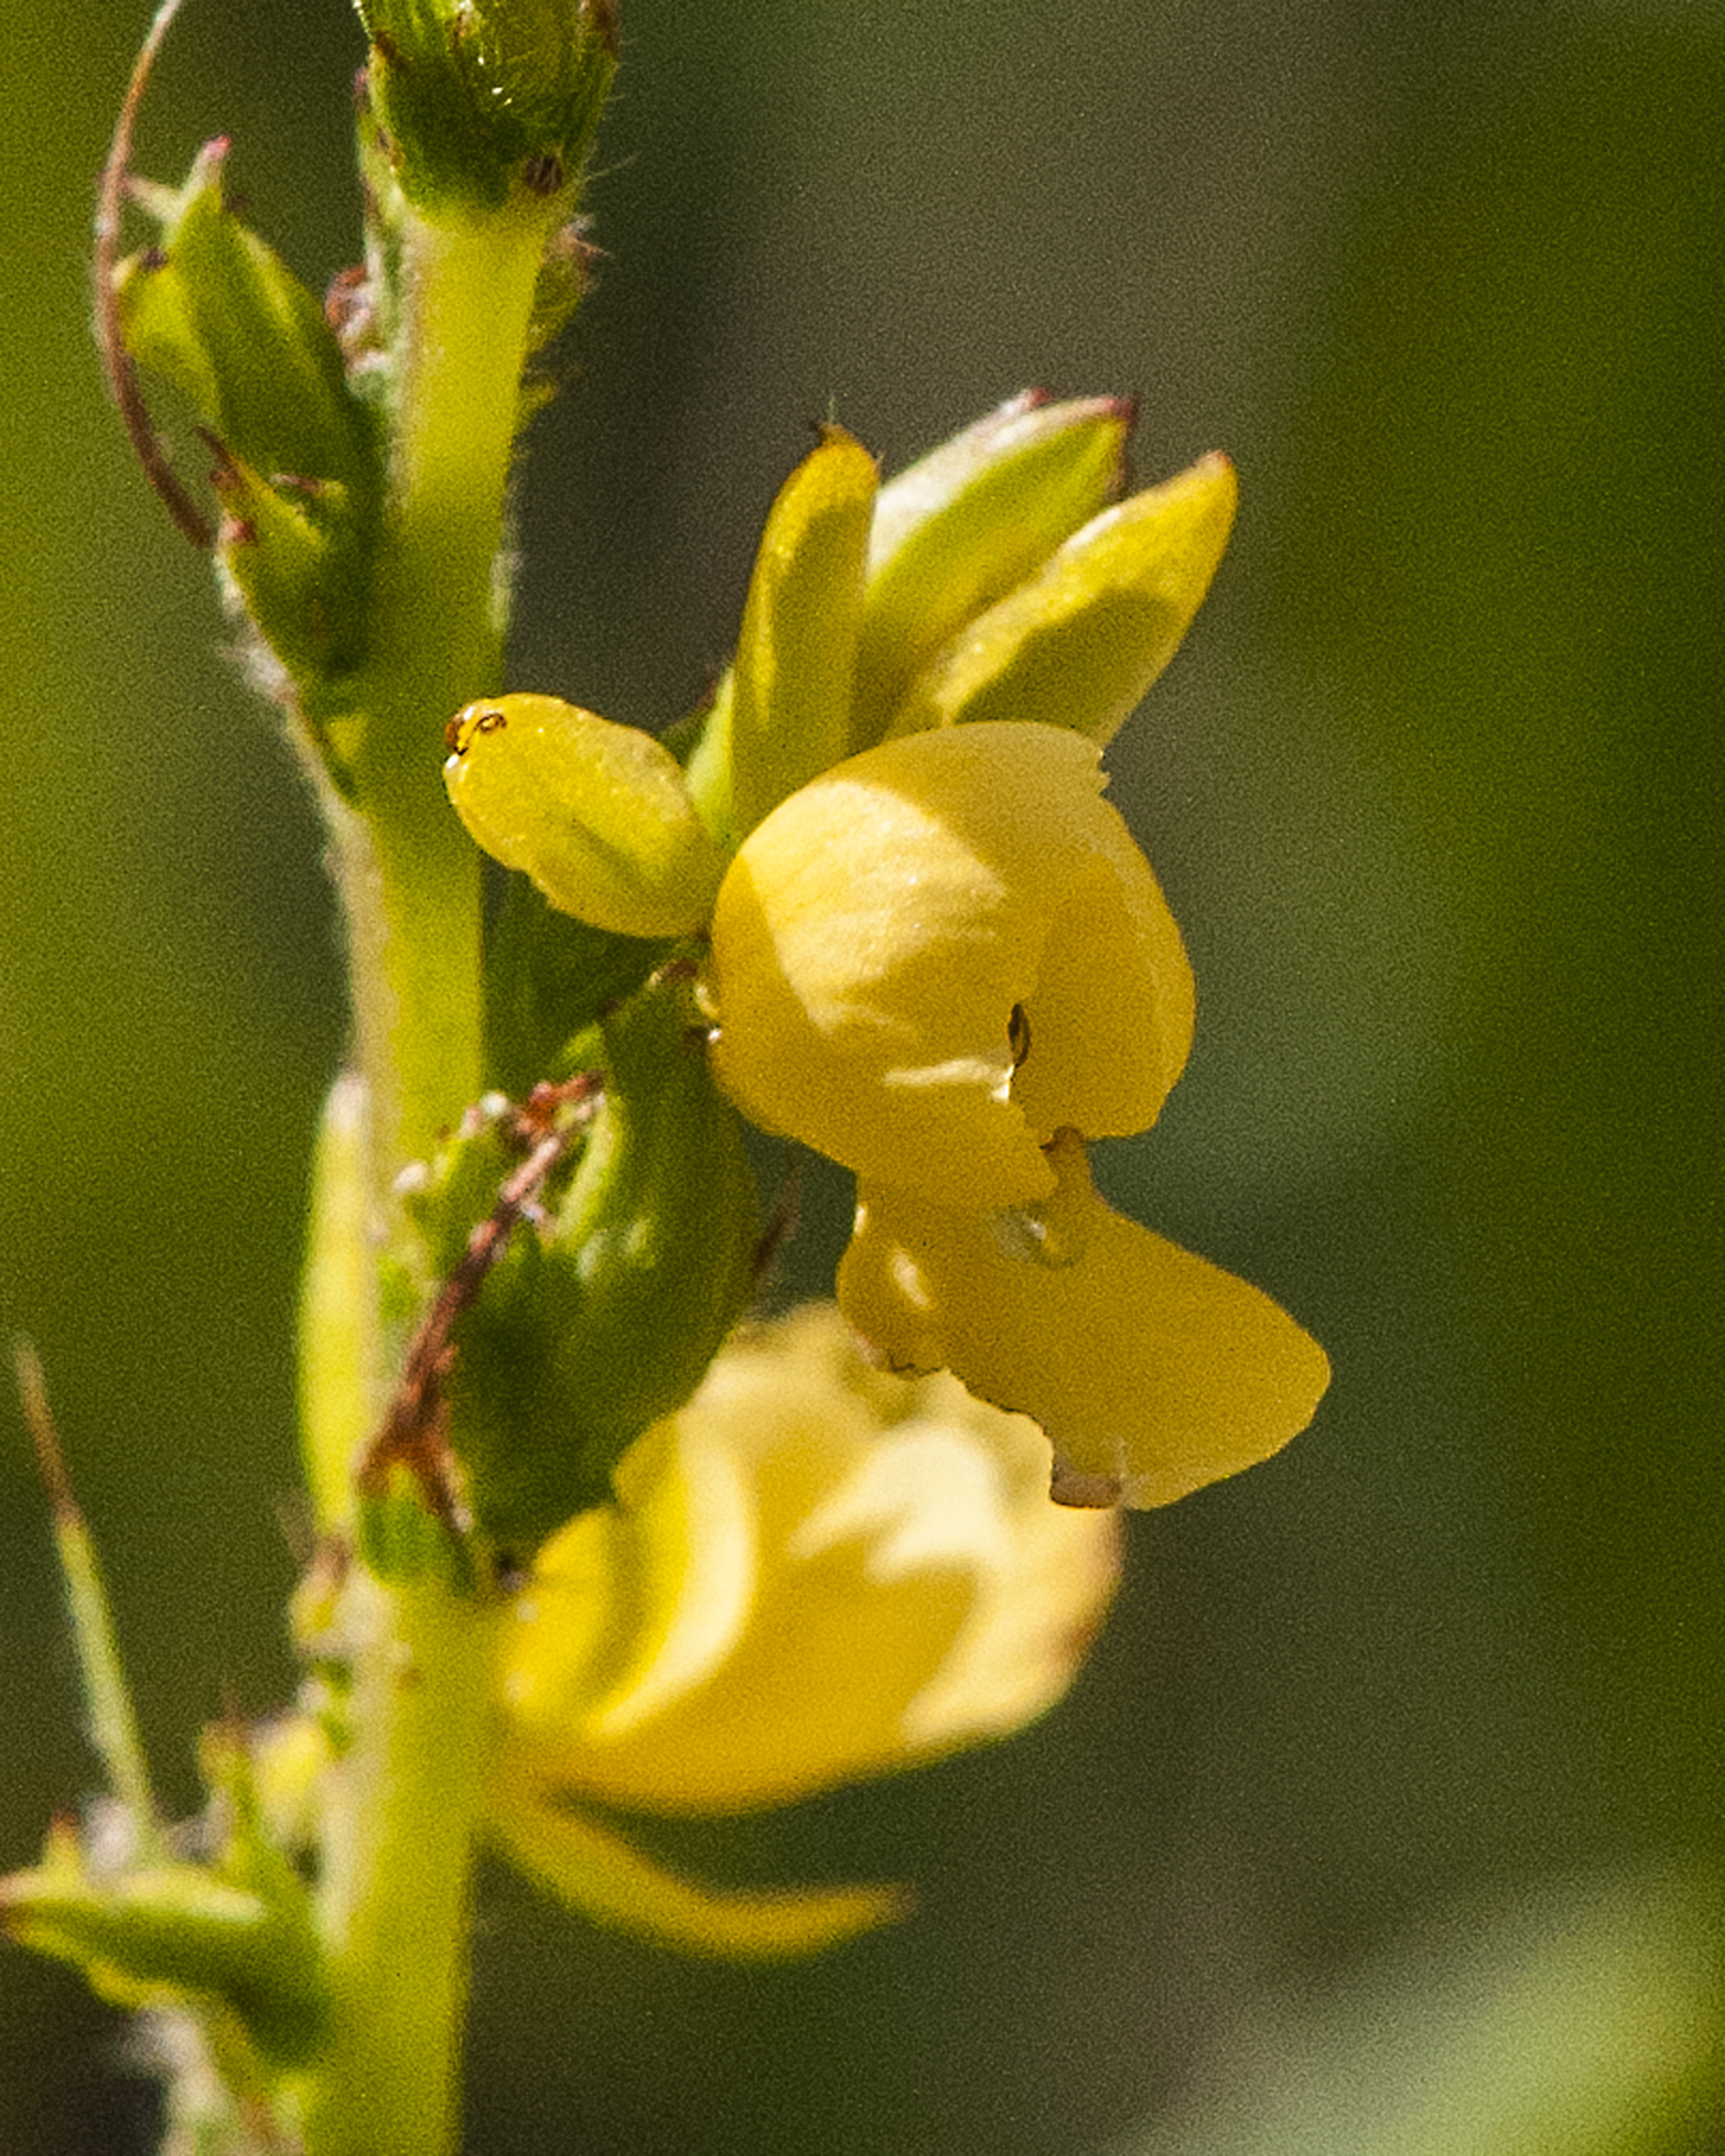 Sensitive Partridge Pea Flower